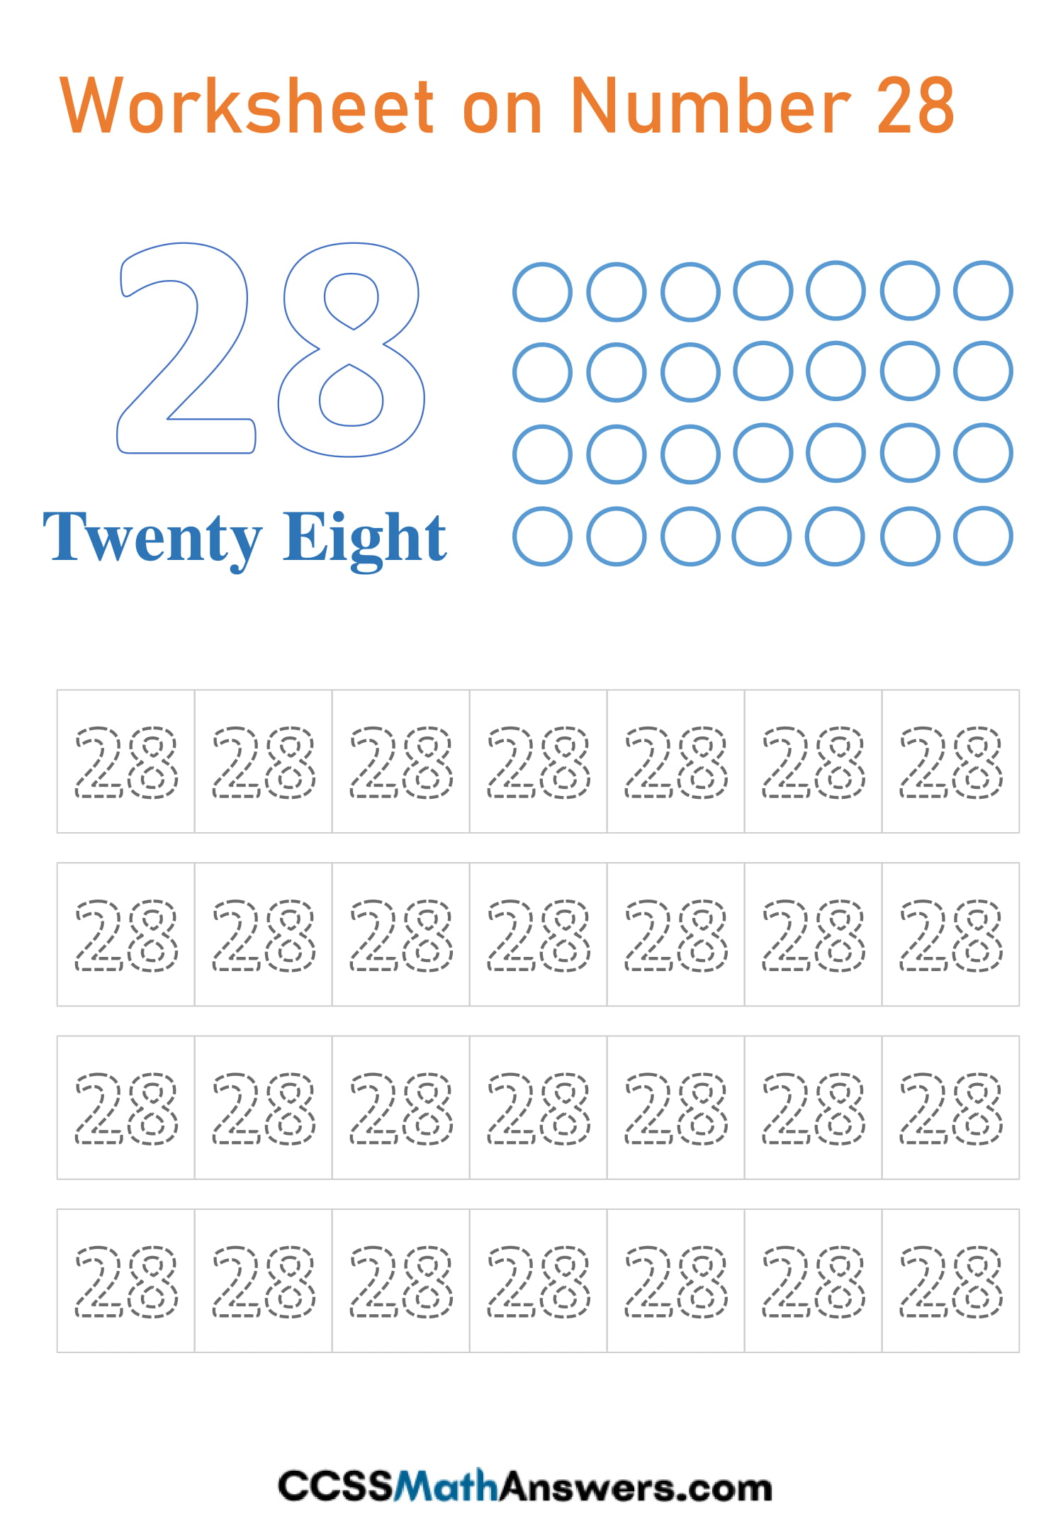 Worksheet on Number 28 | Free Printable Number 28 Writing, Counting